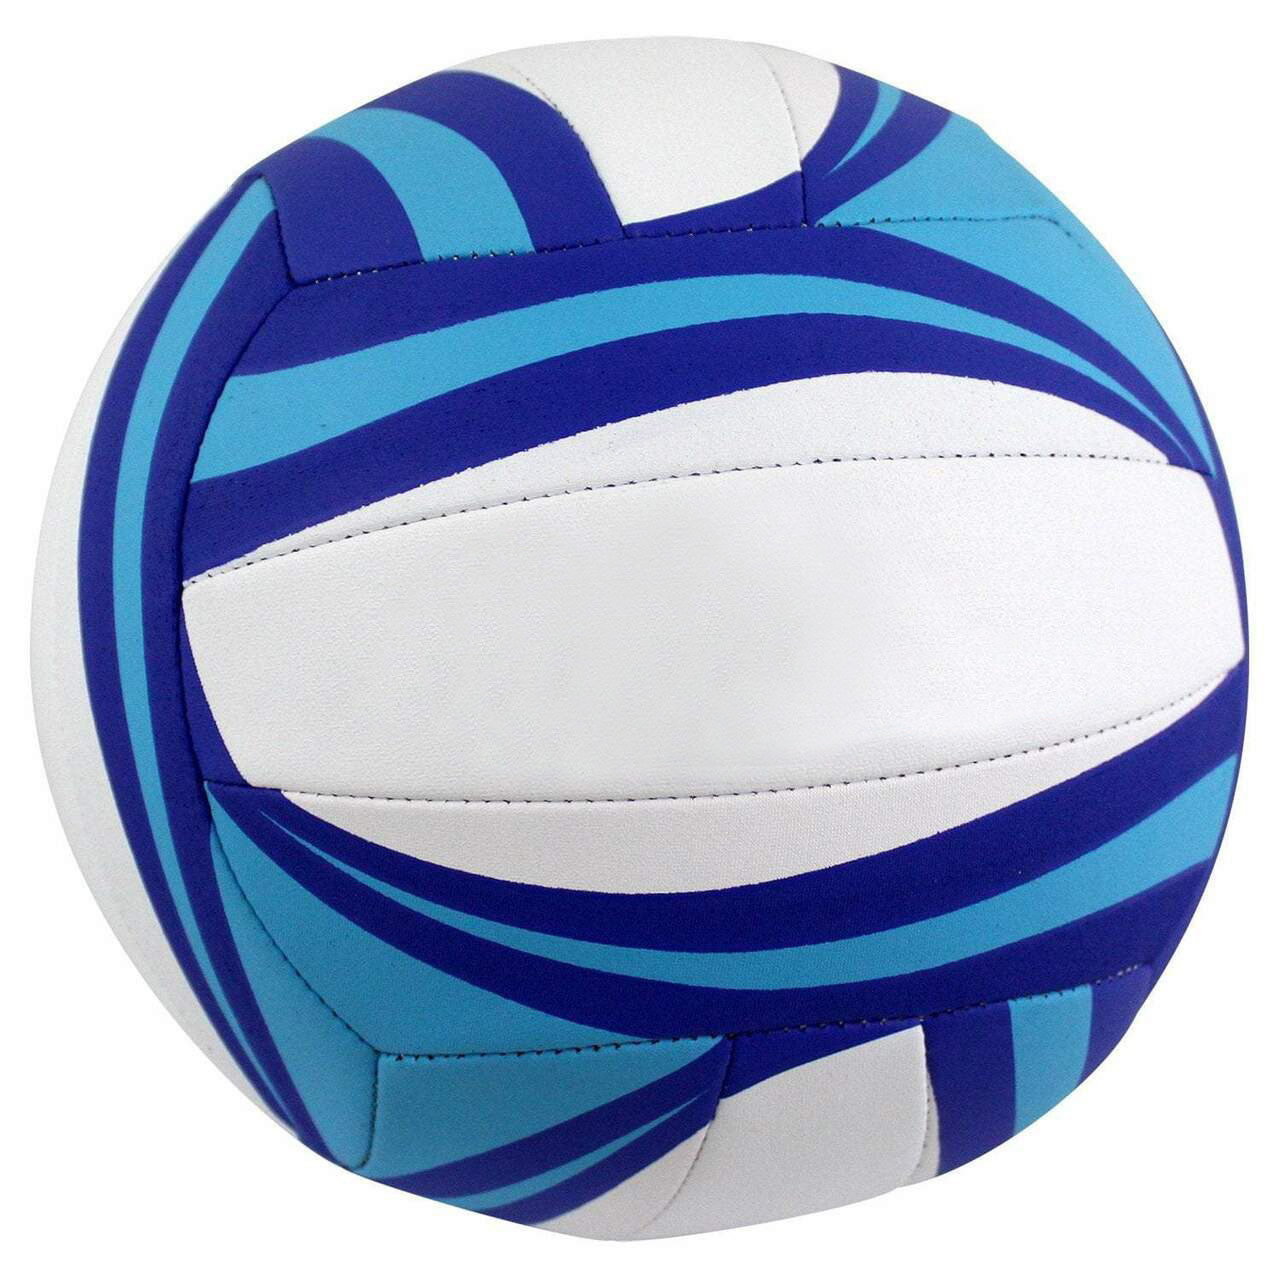 Super Soft Resistant 18 Panel Volleyball - VolleyballUSA.com / United Volleyball Supply, LLC.